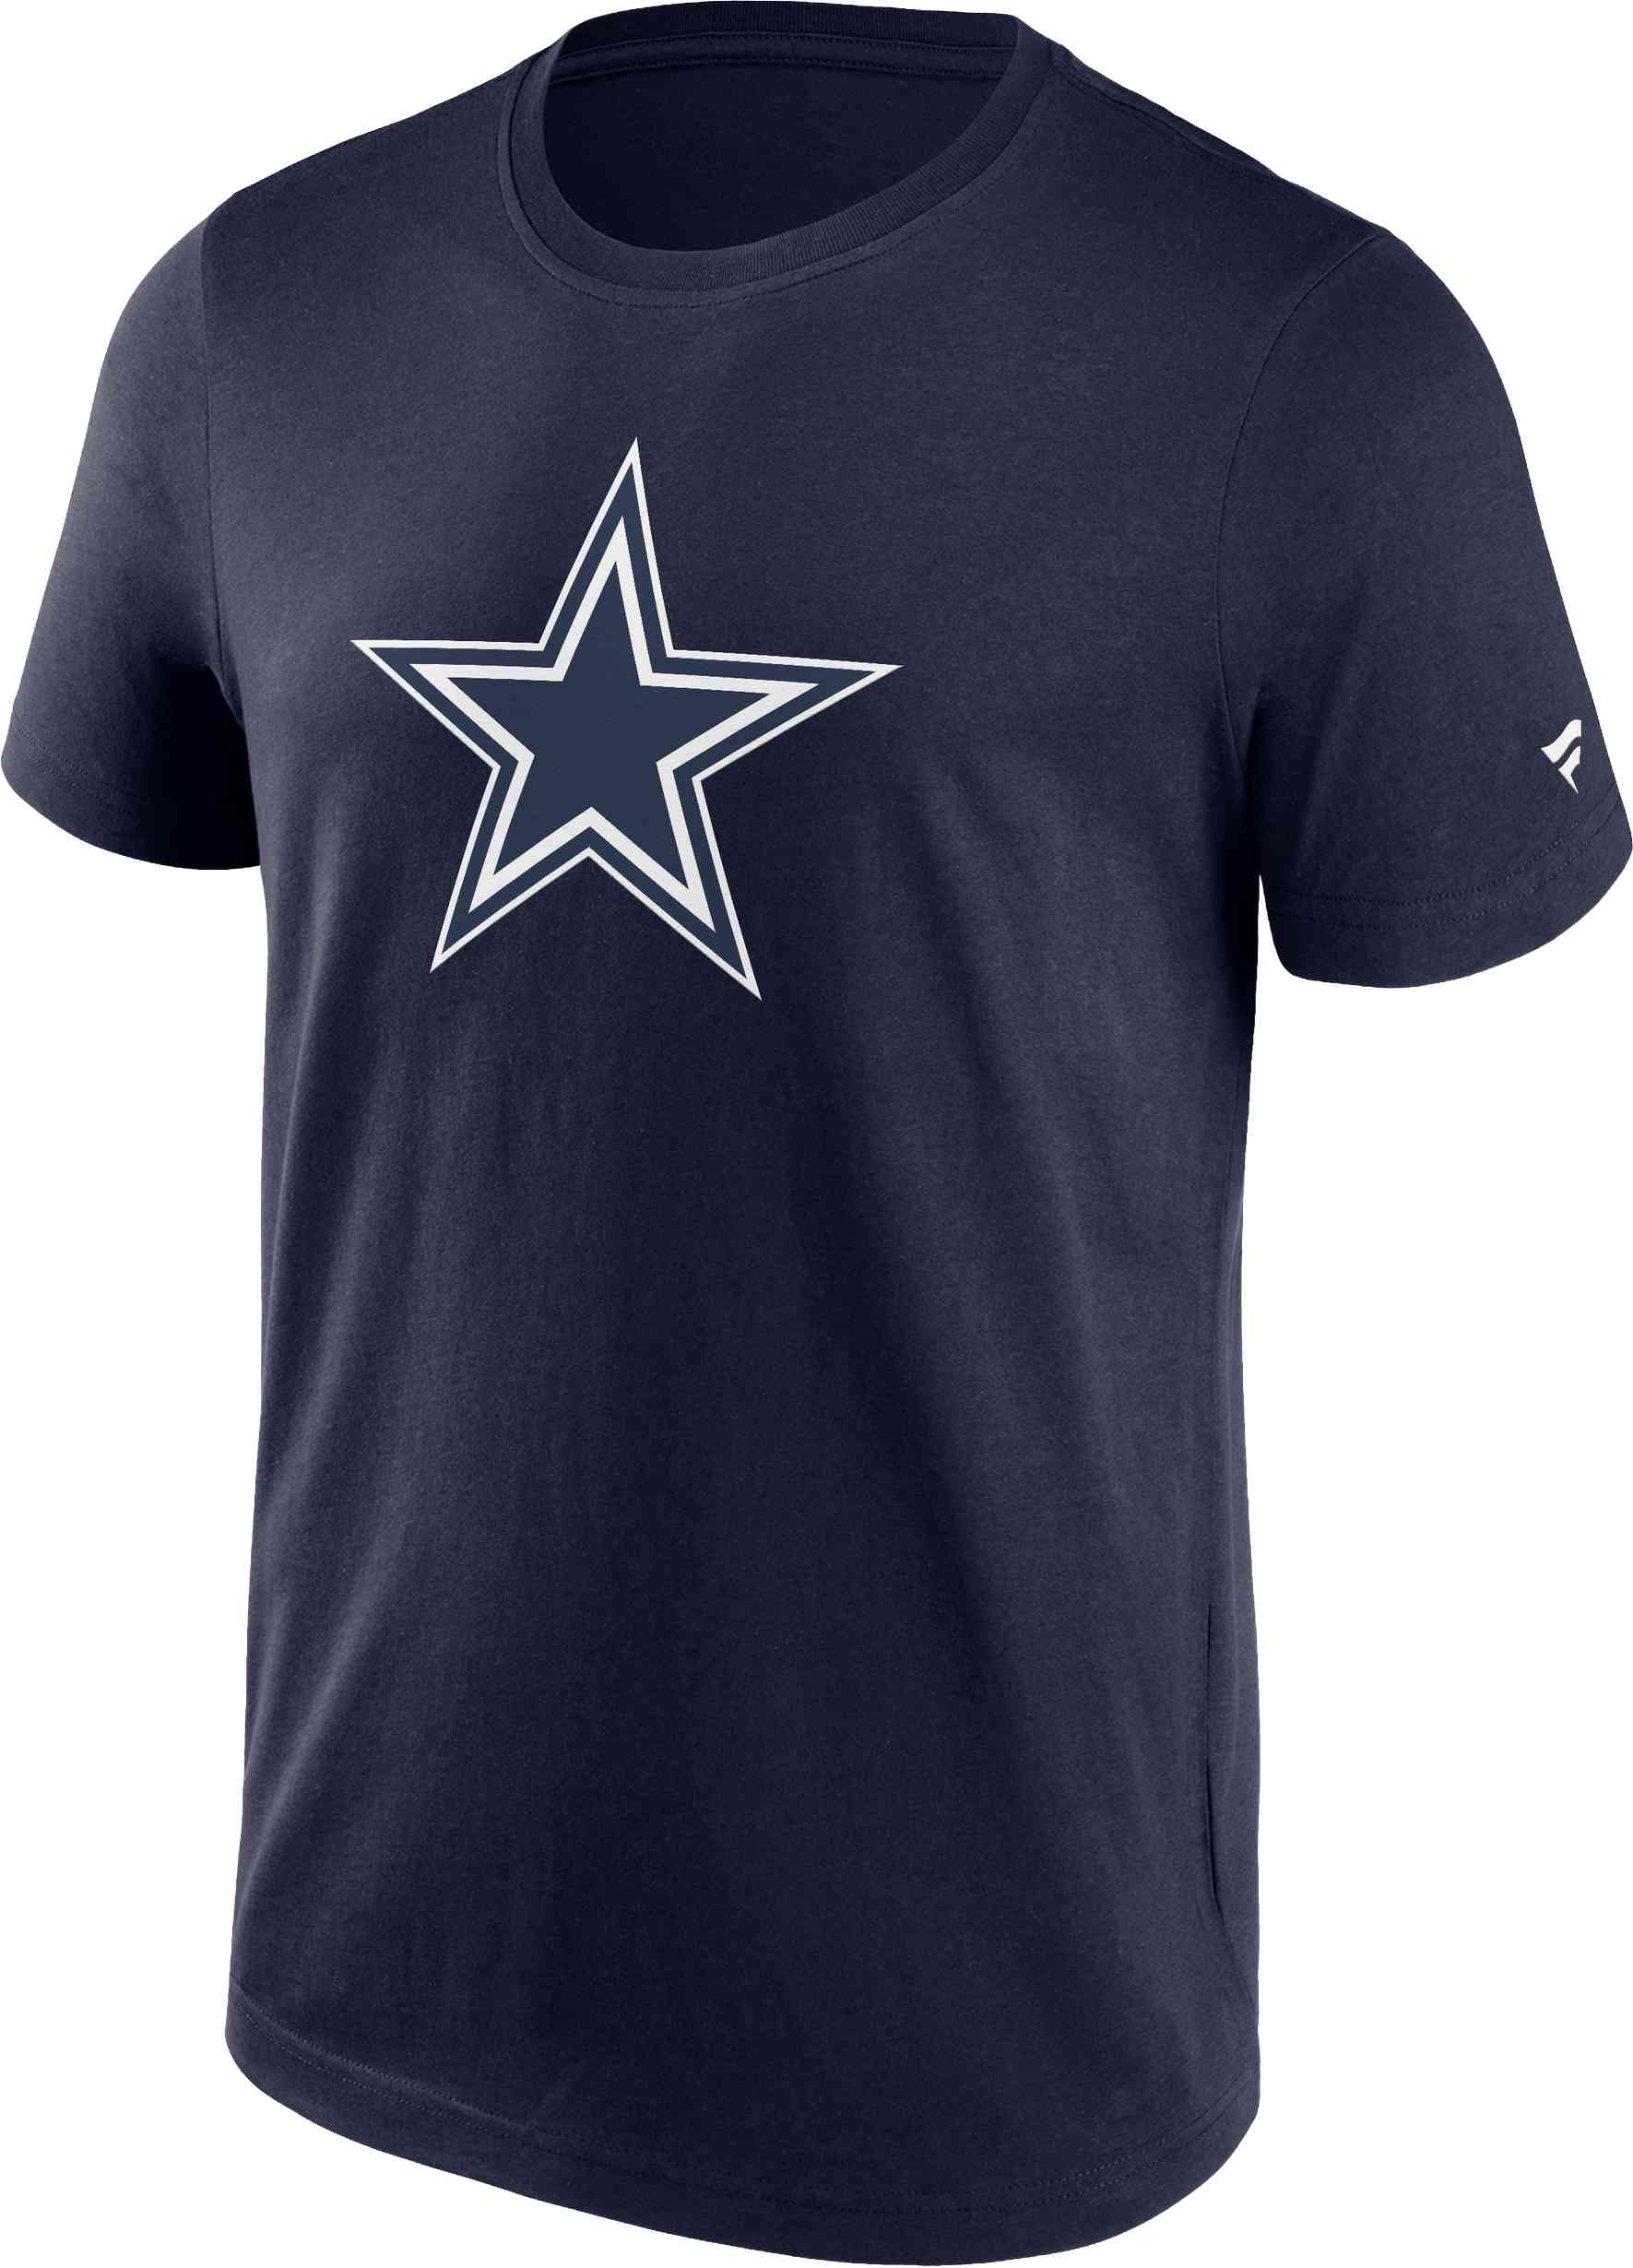 Fanatics - NFL Dallas Cowboys Primary Logo Graphic T-Shirt